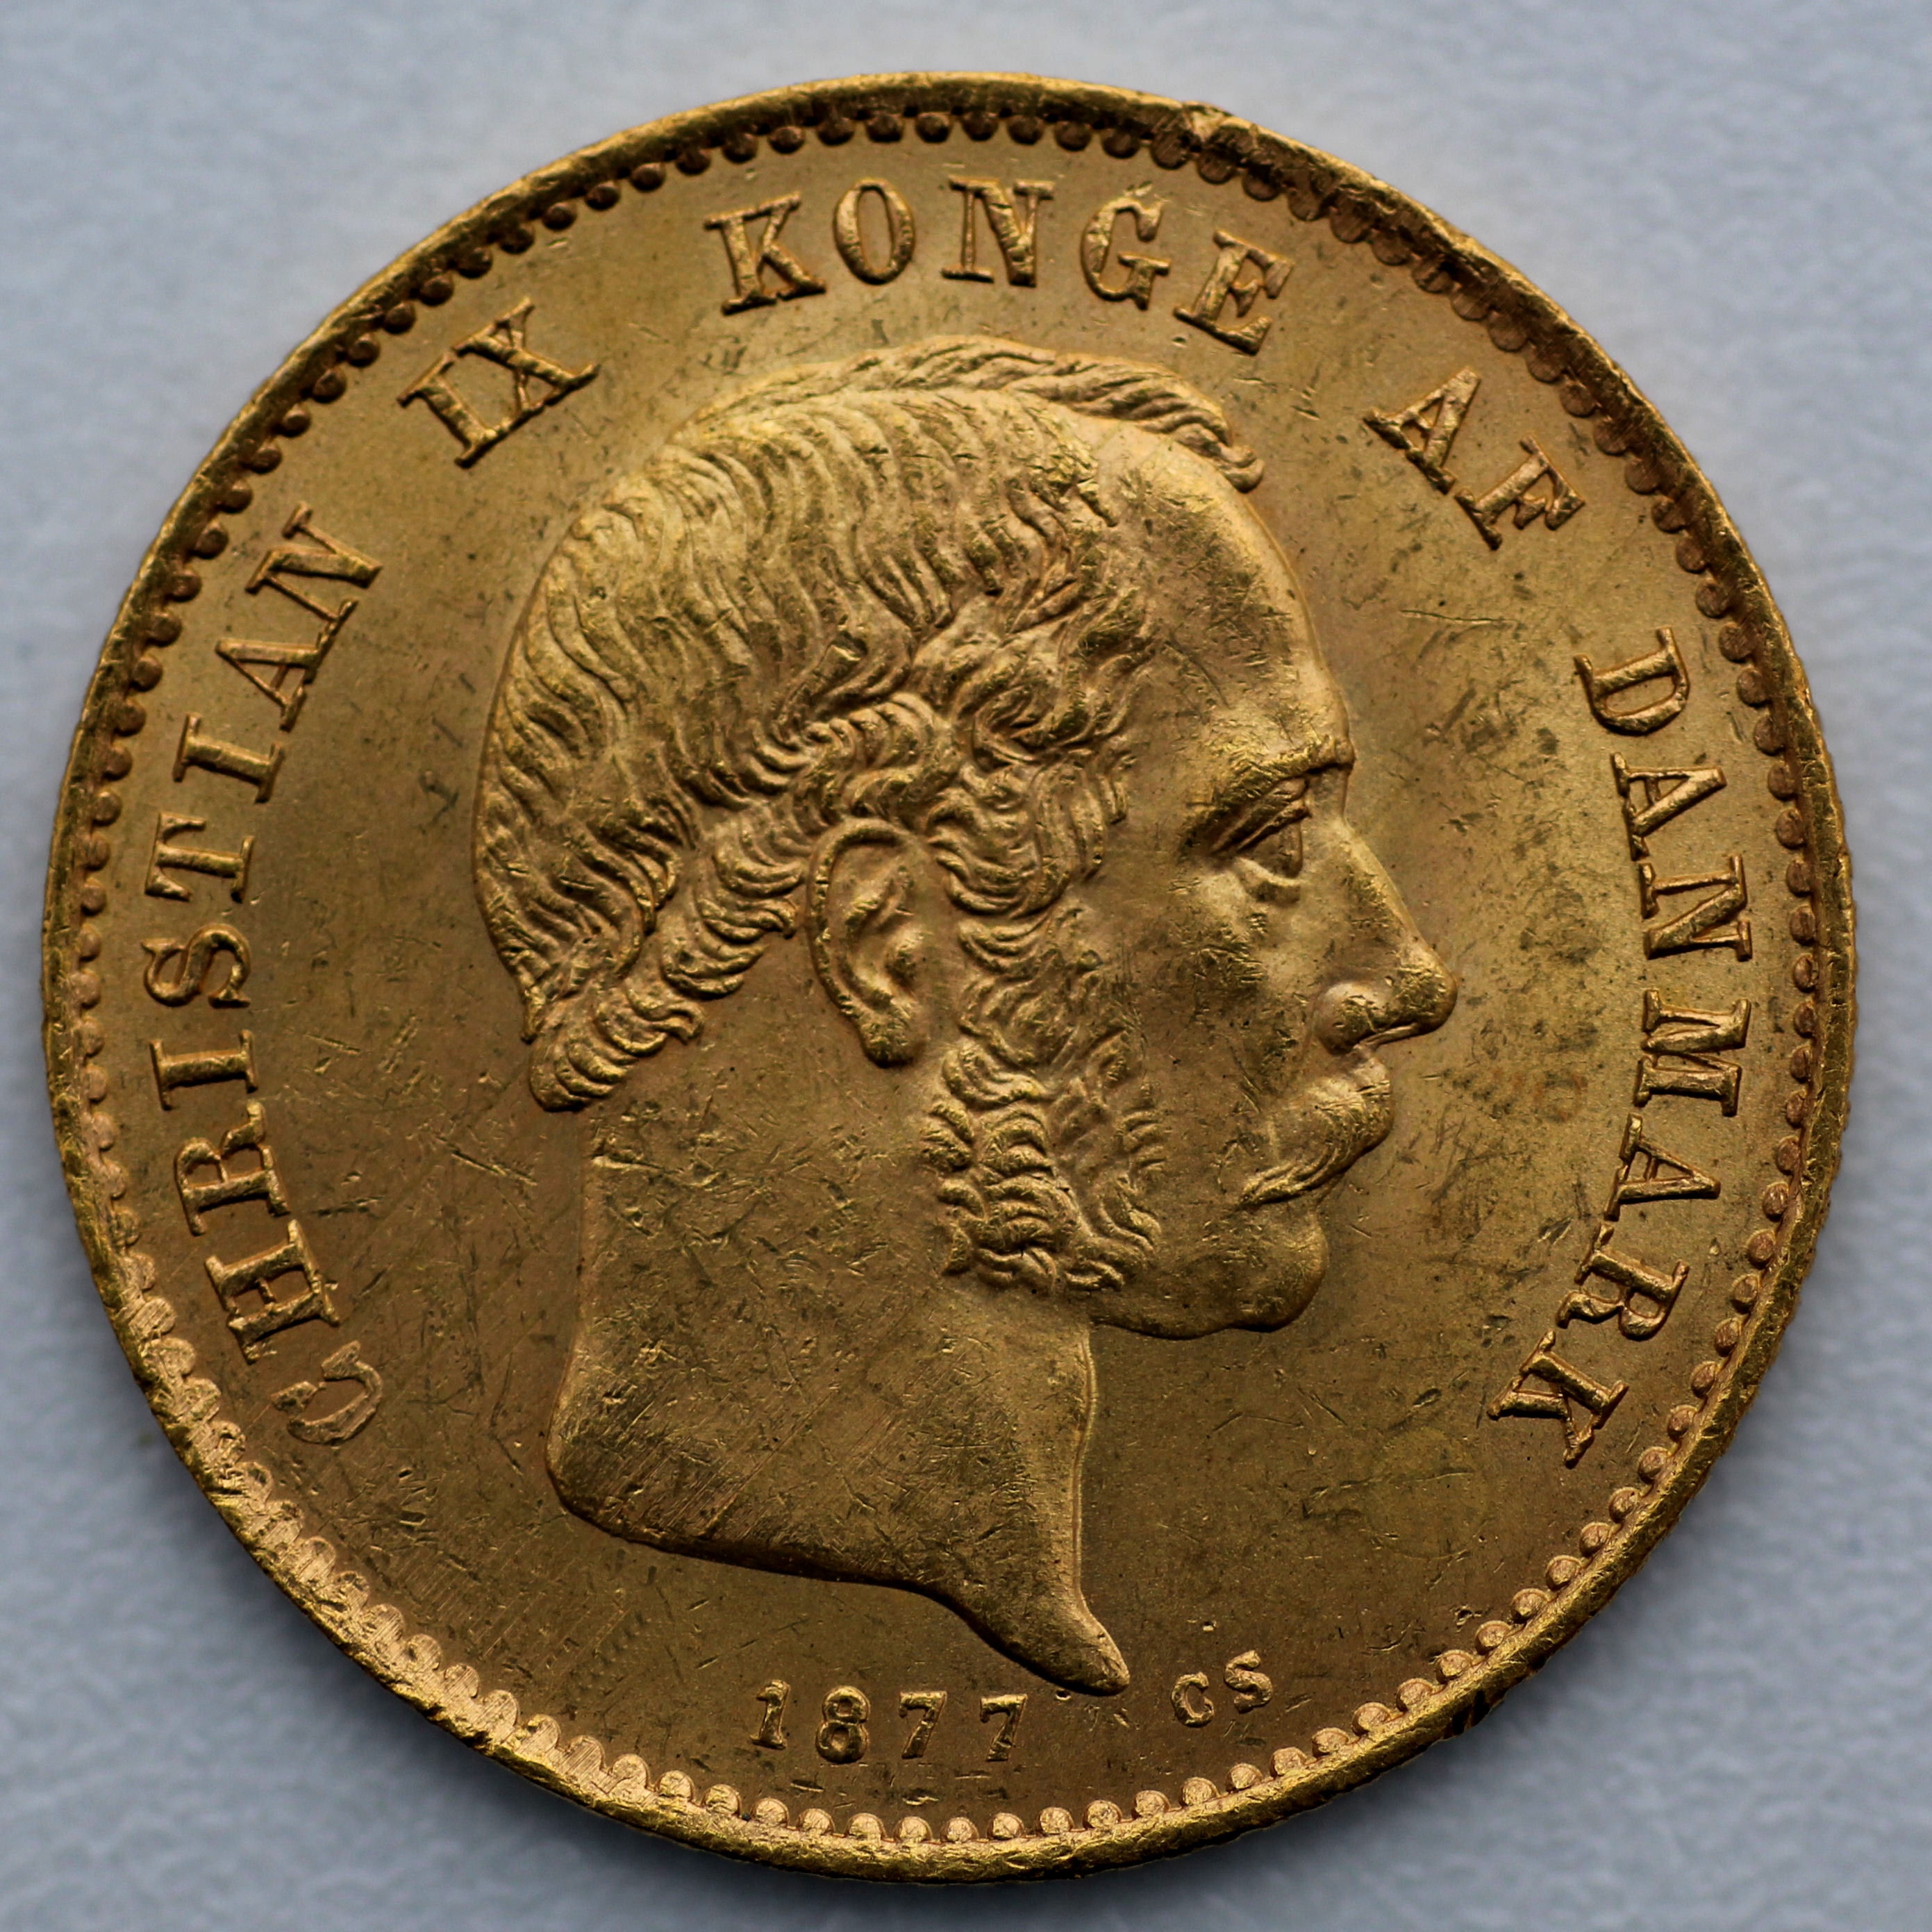 Goldmünze 20 Kronen/Christian IX. (Dänemark)